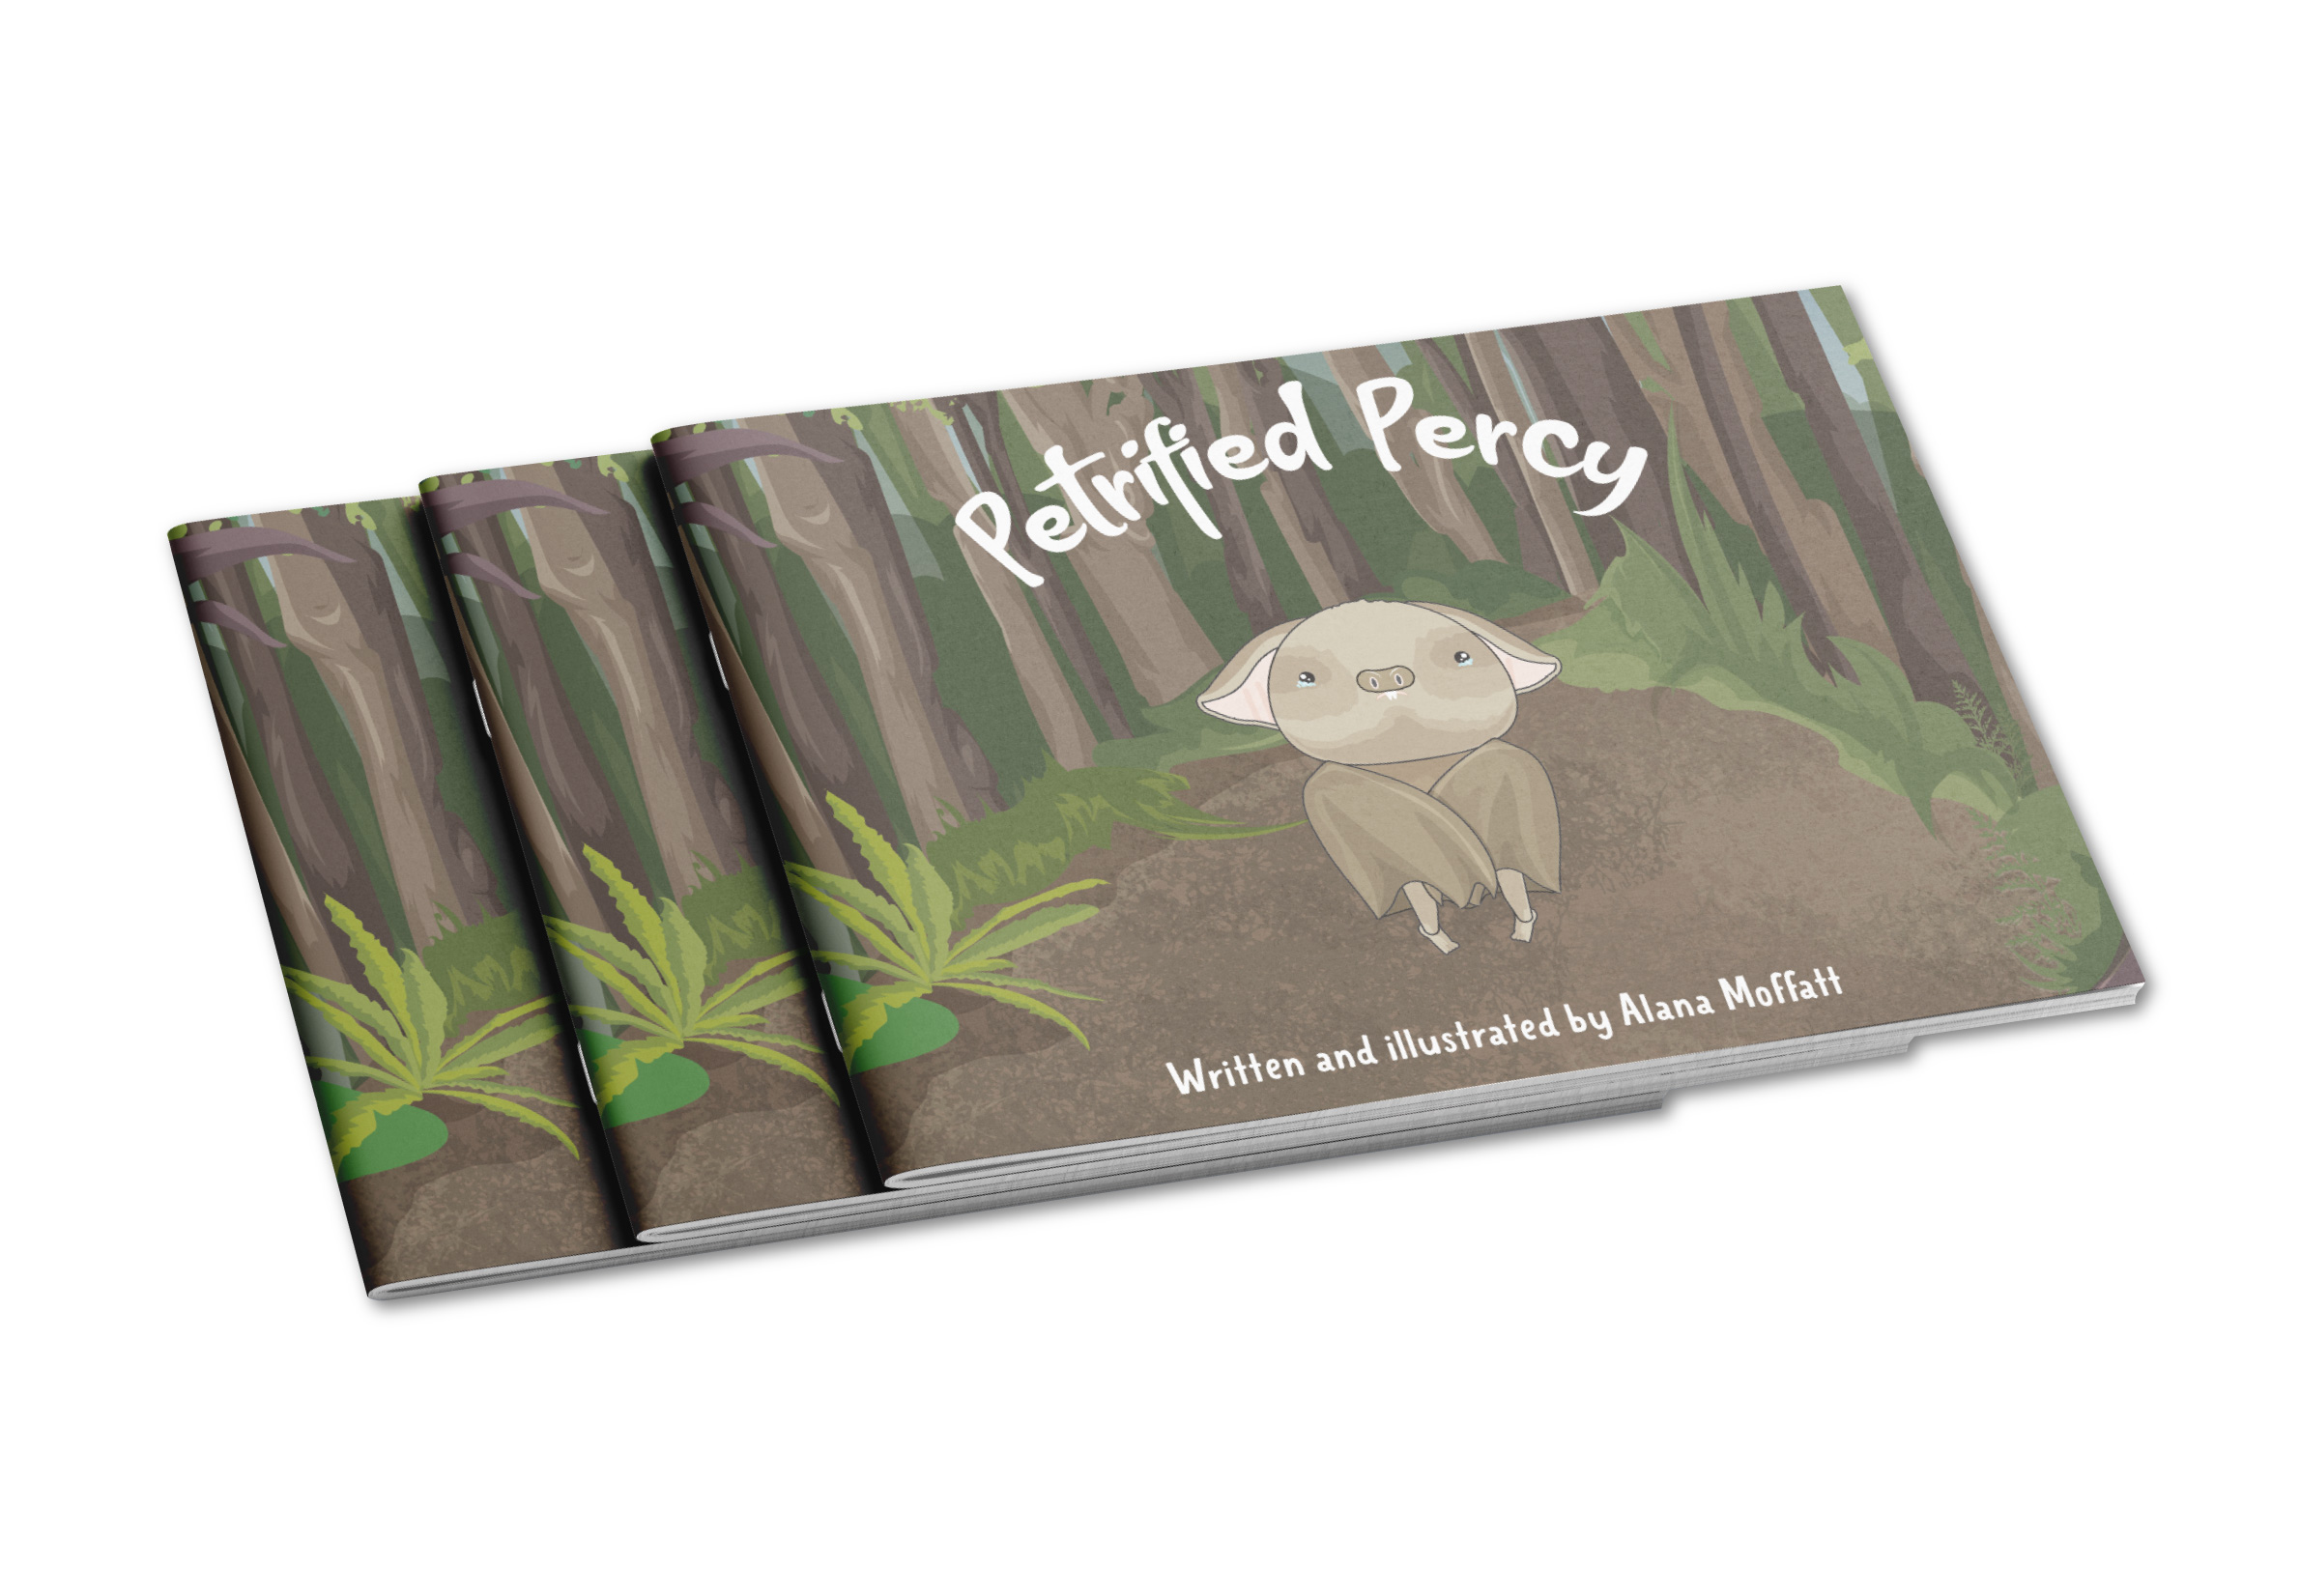 Petrified Percy - Illustrations